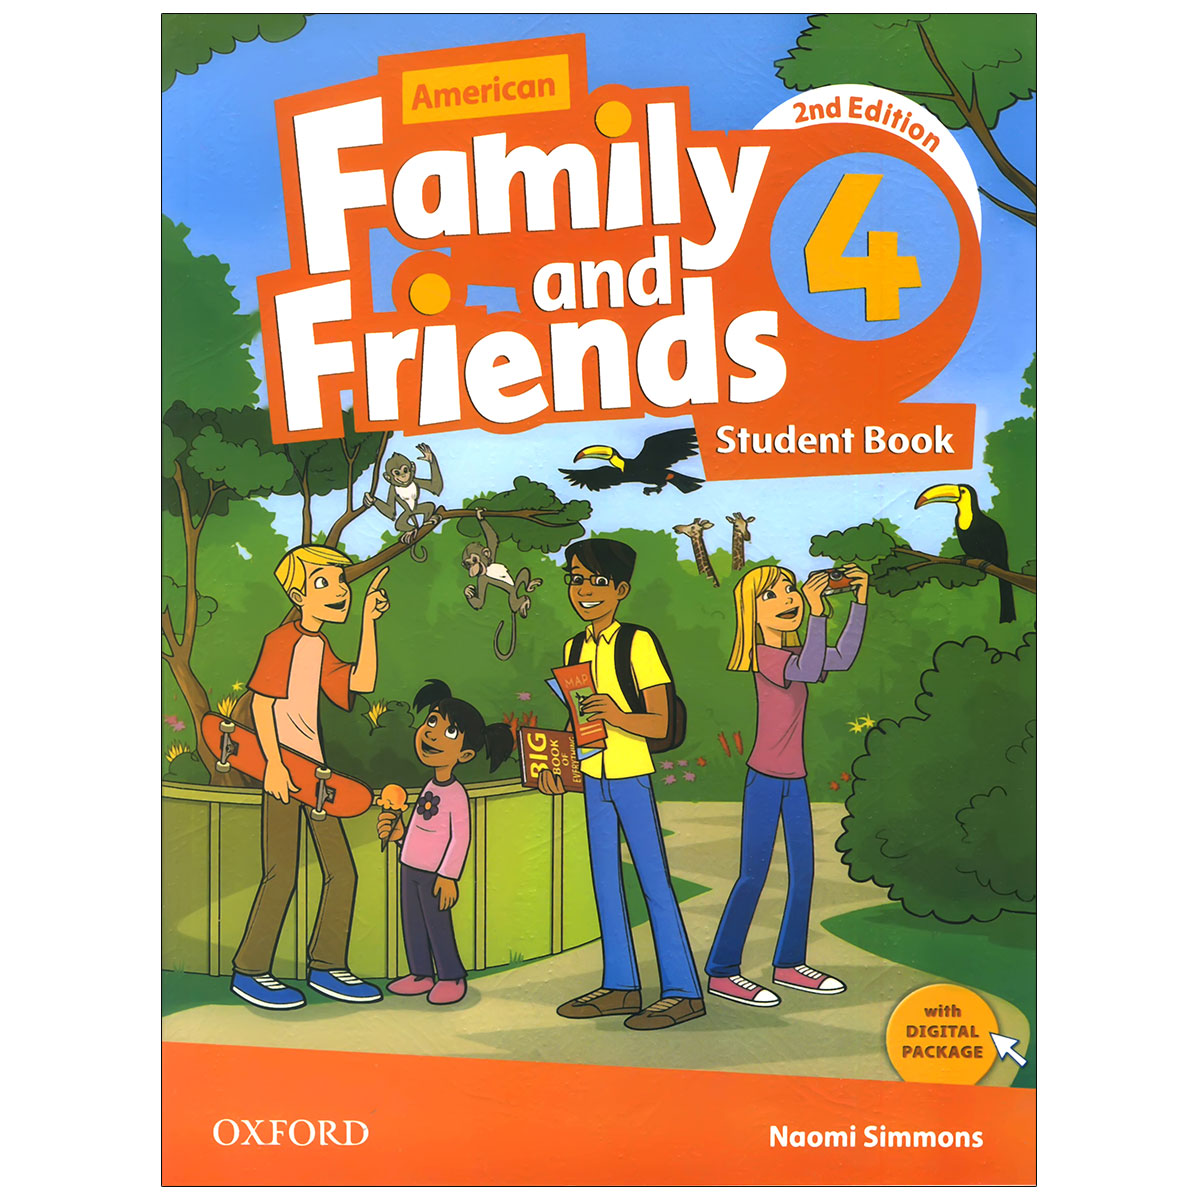 کتاب American Family and Friends 2nd 4 اثر جمعی از نویسندگان انتشارات اکسفورد